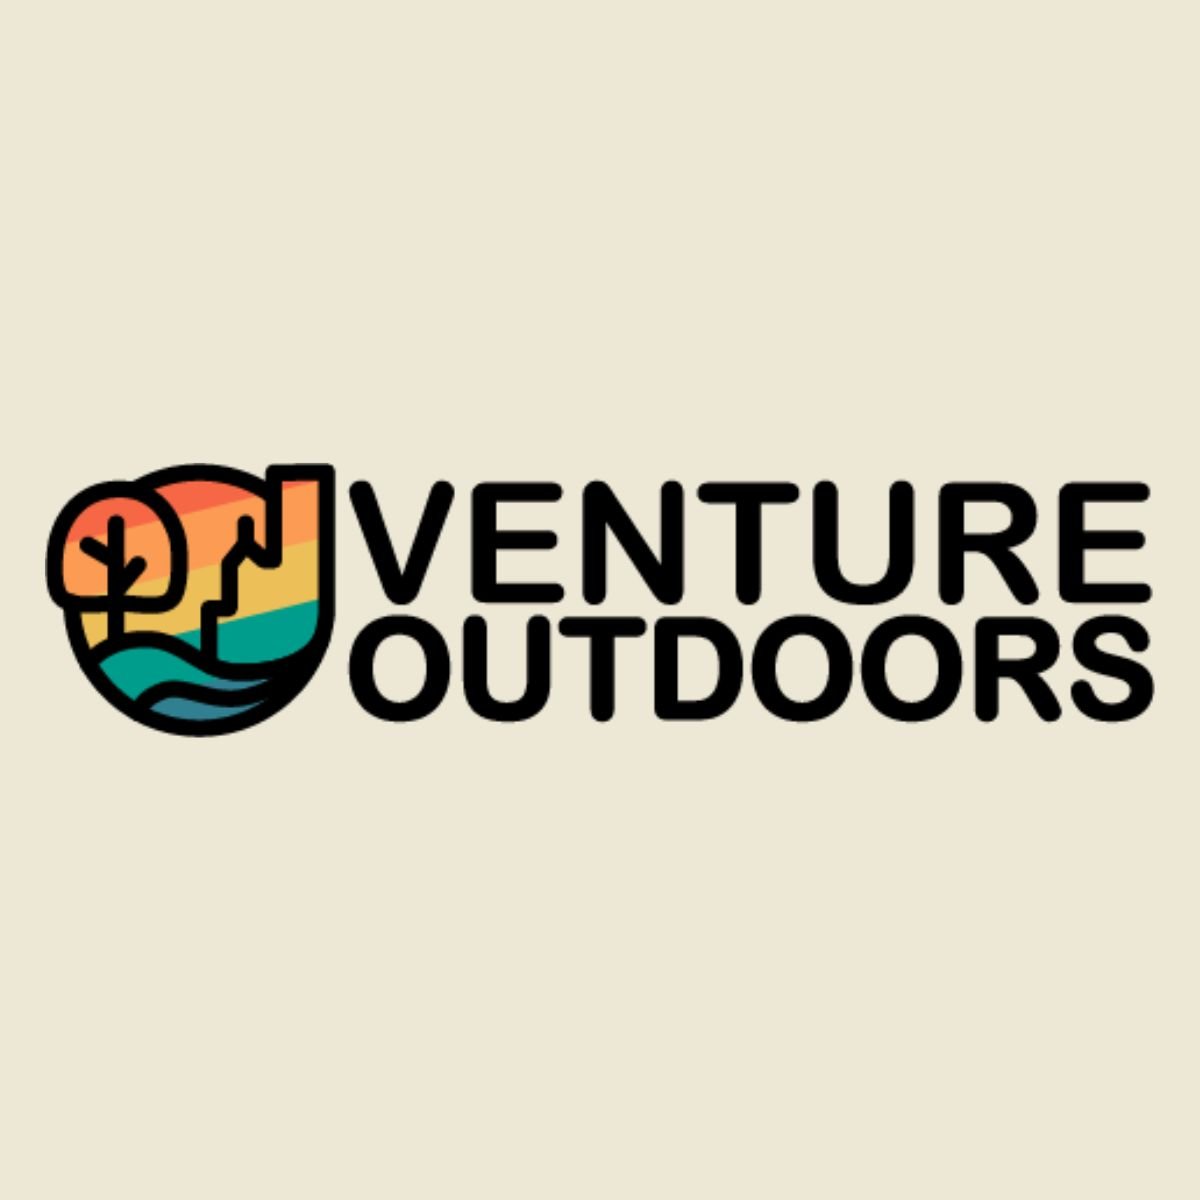 Venture Outdoors logo 